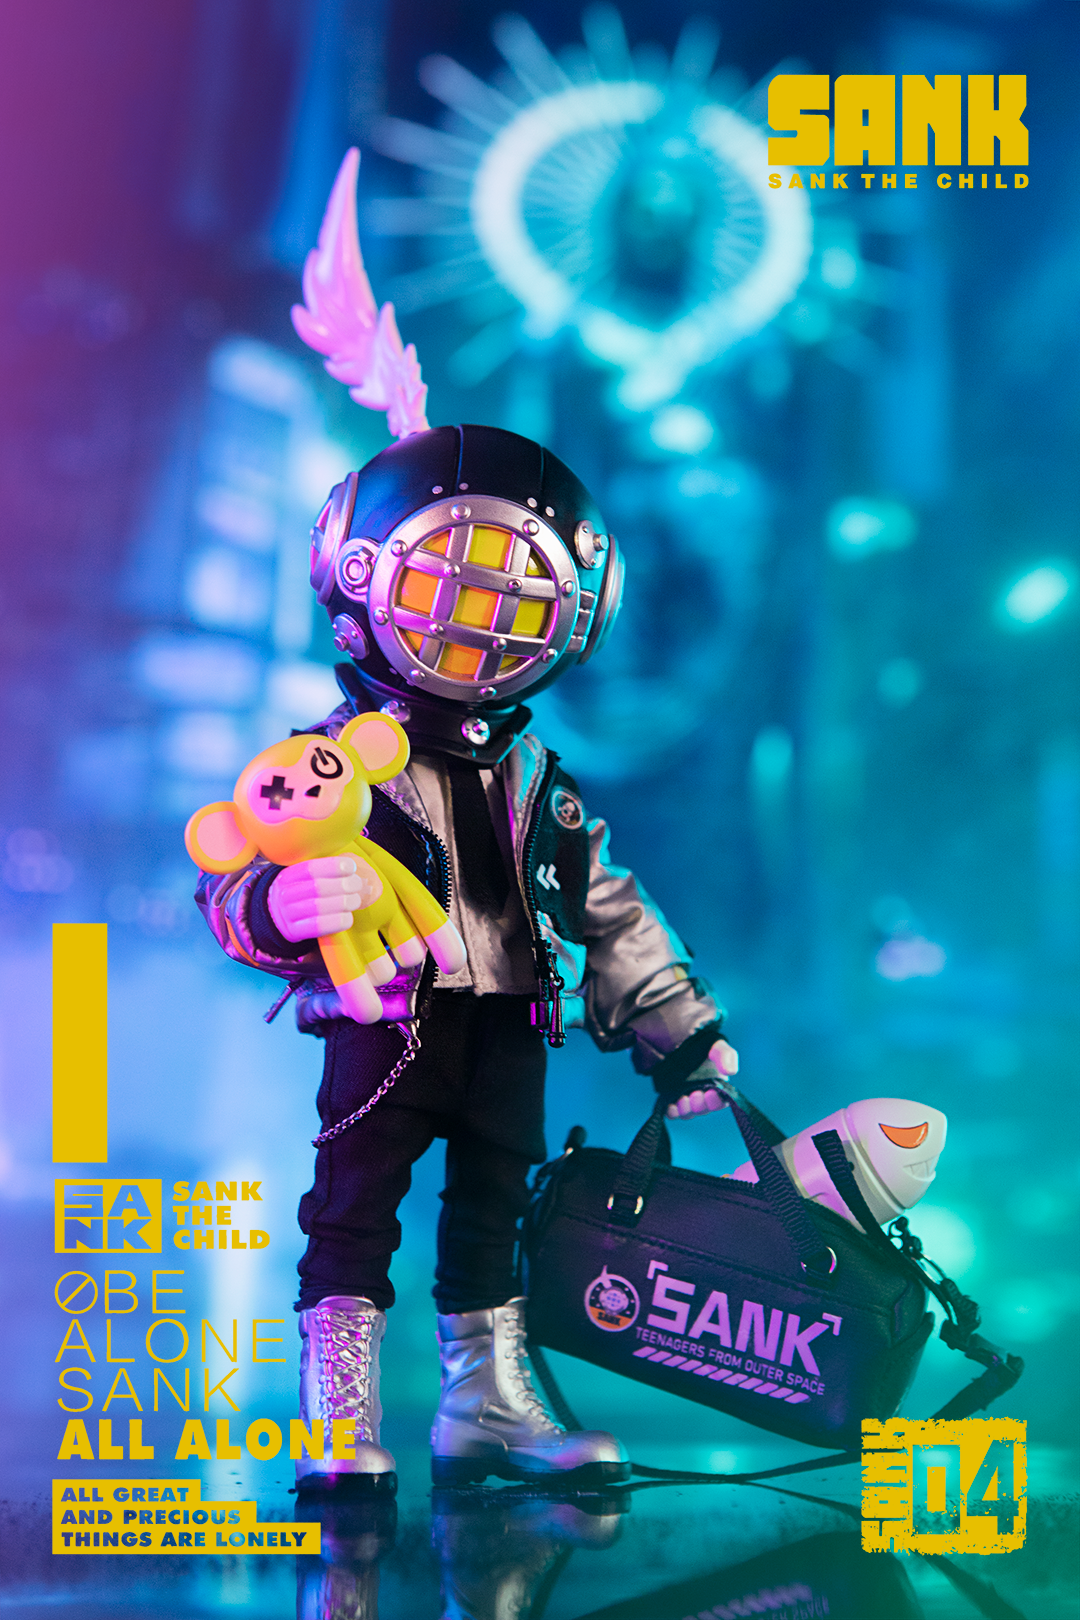 Sank - Action Figure- Future Boy by Sank Toys